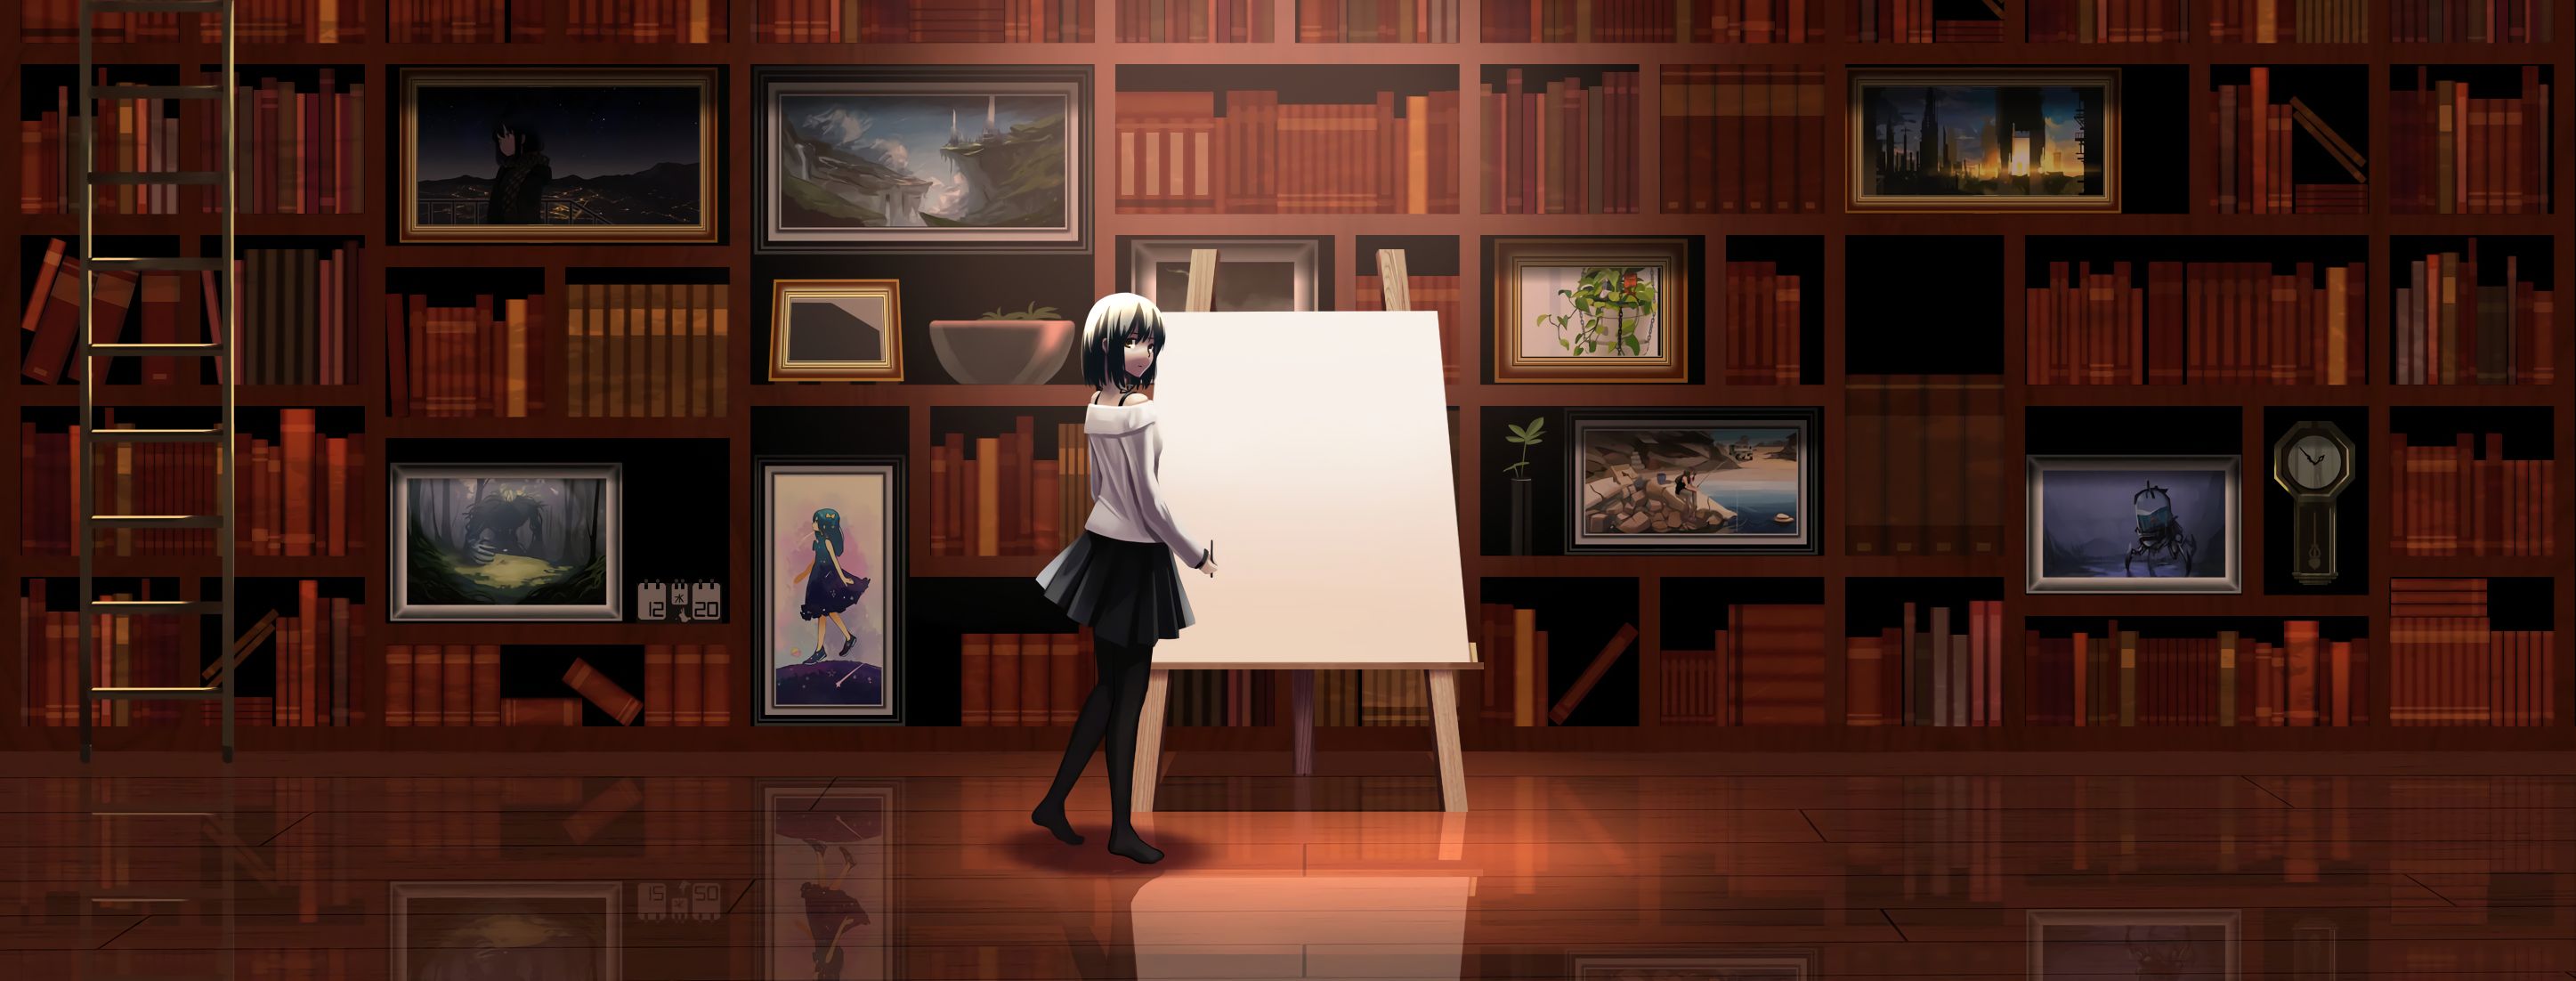 Library anime illustration 5 Centimeters Per Second anime HD wallpaper   Wallpaper Flare